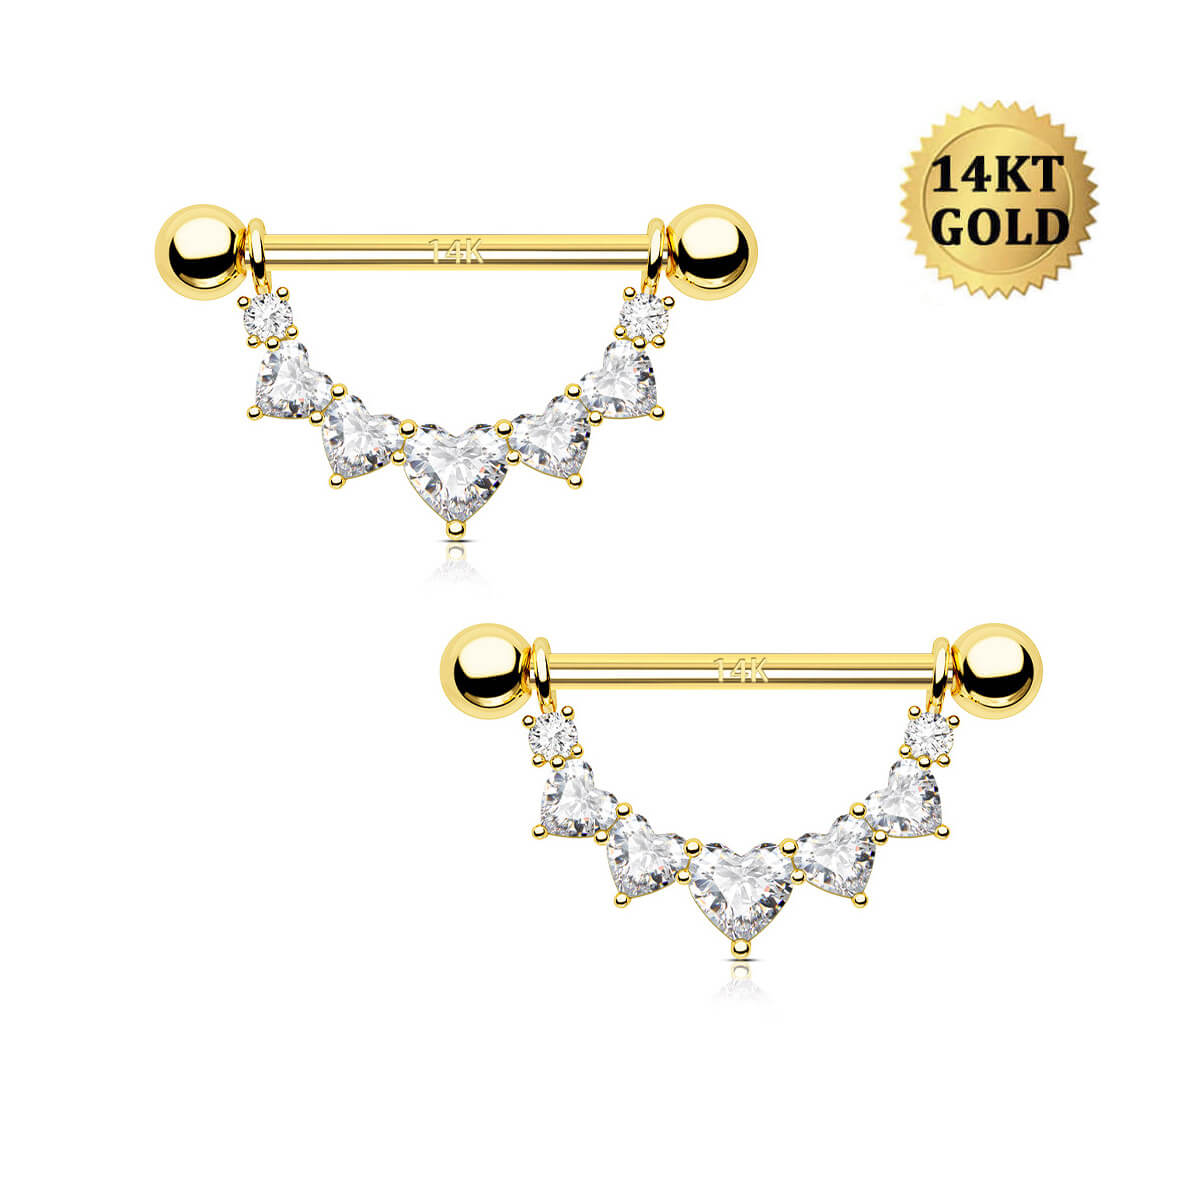 14k solid gold nipple shield jewelry